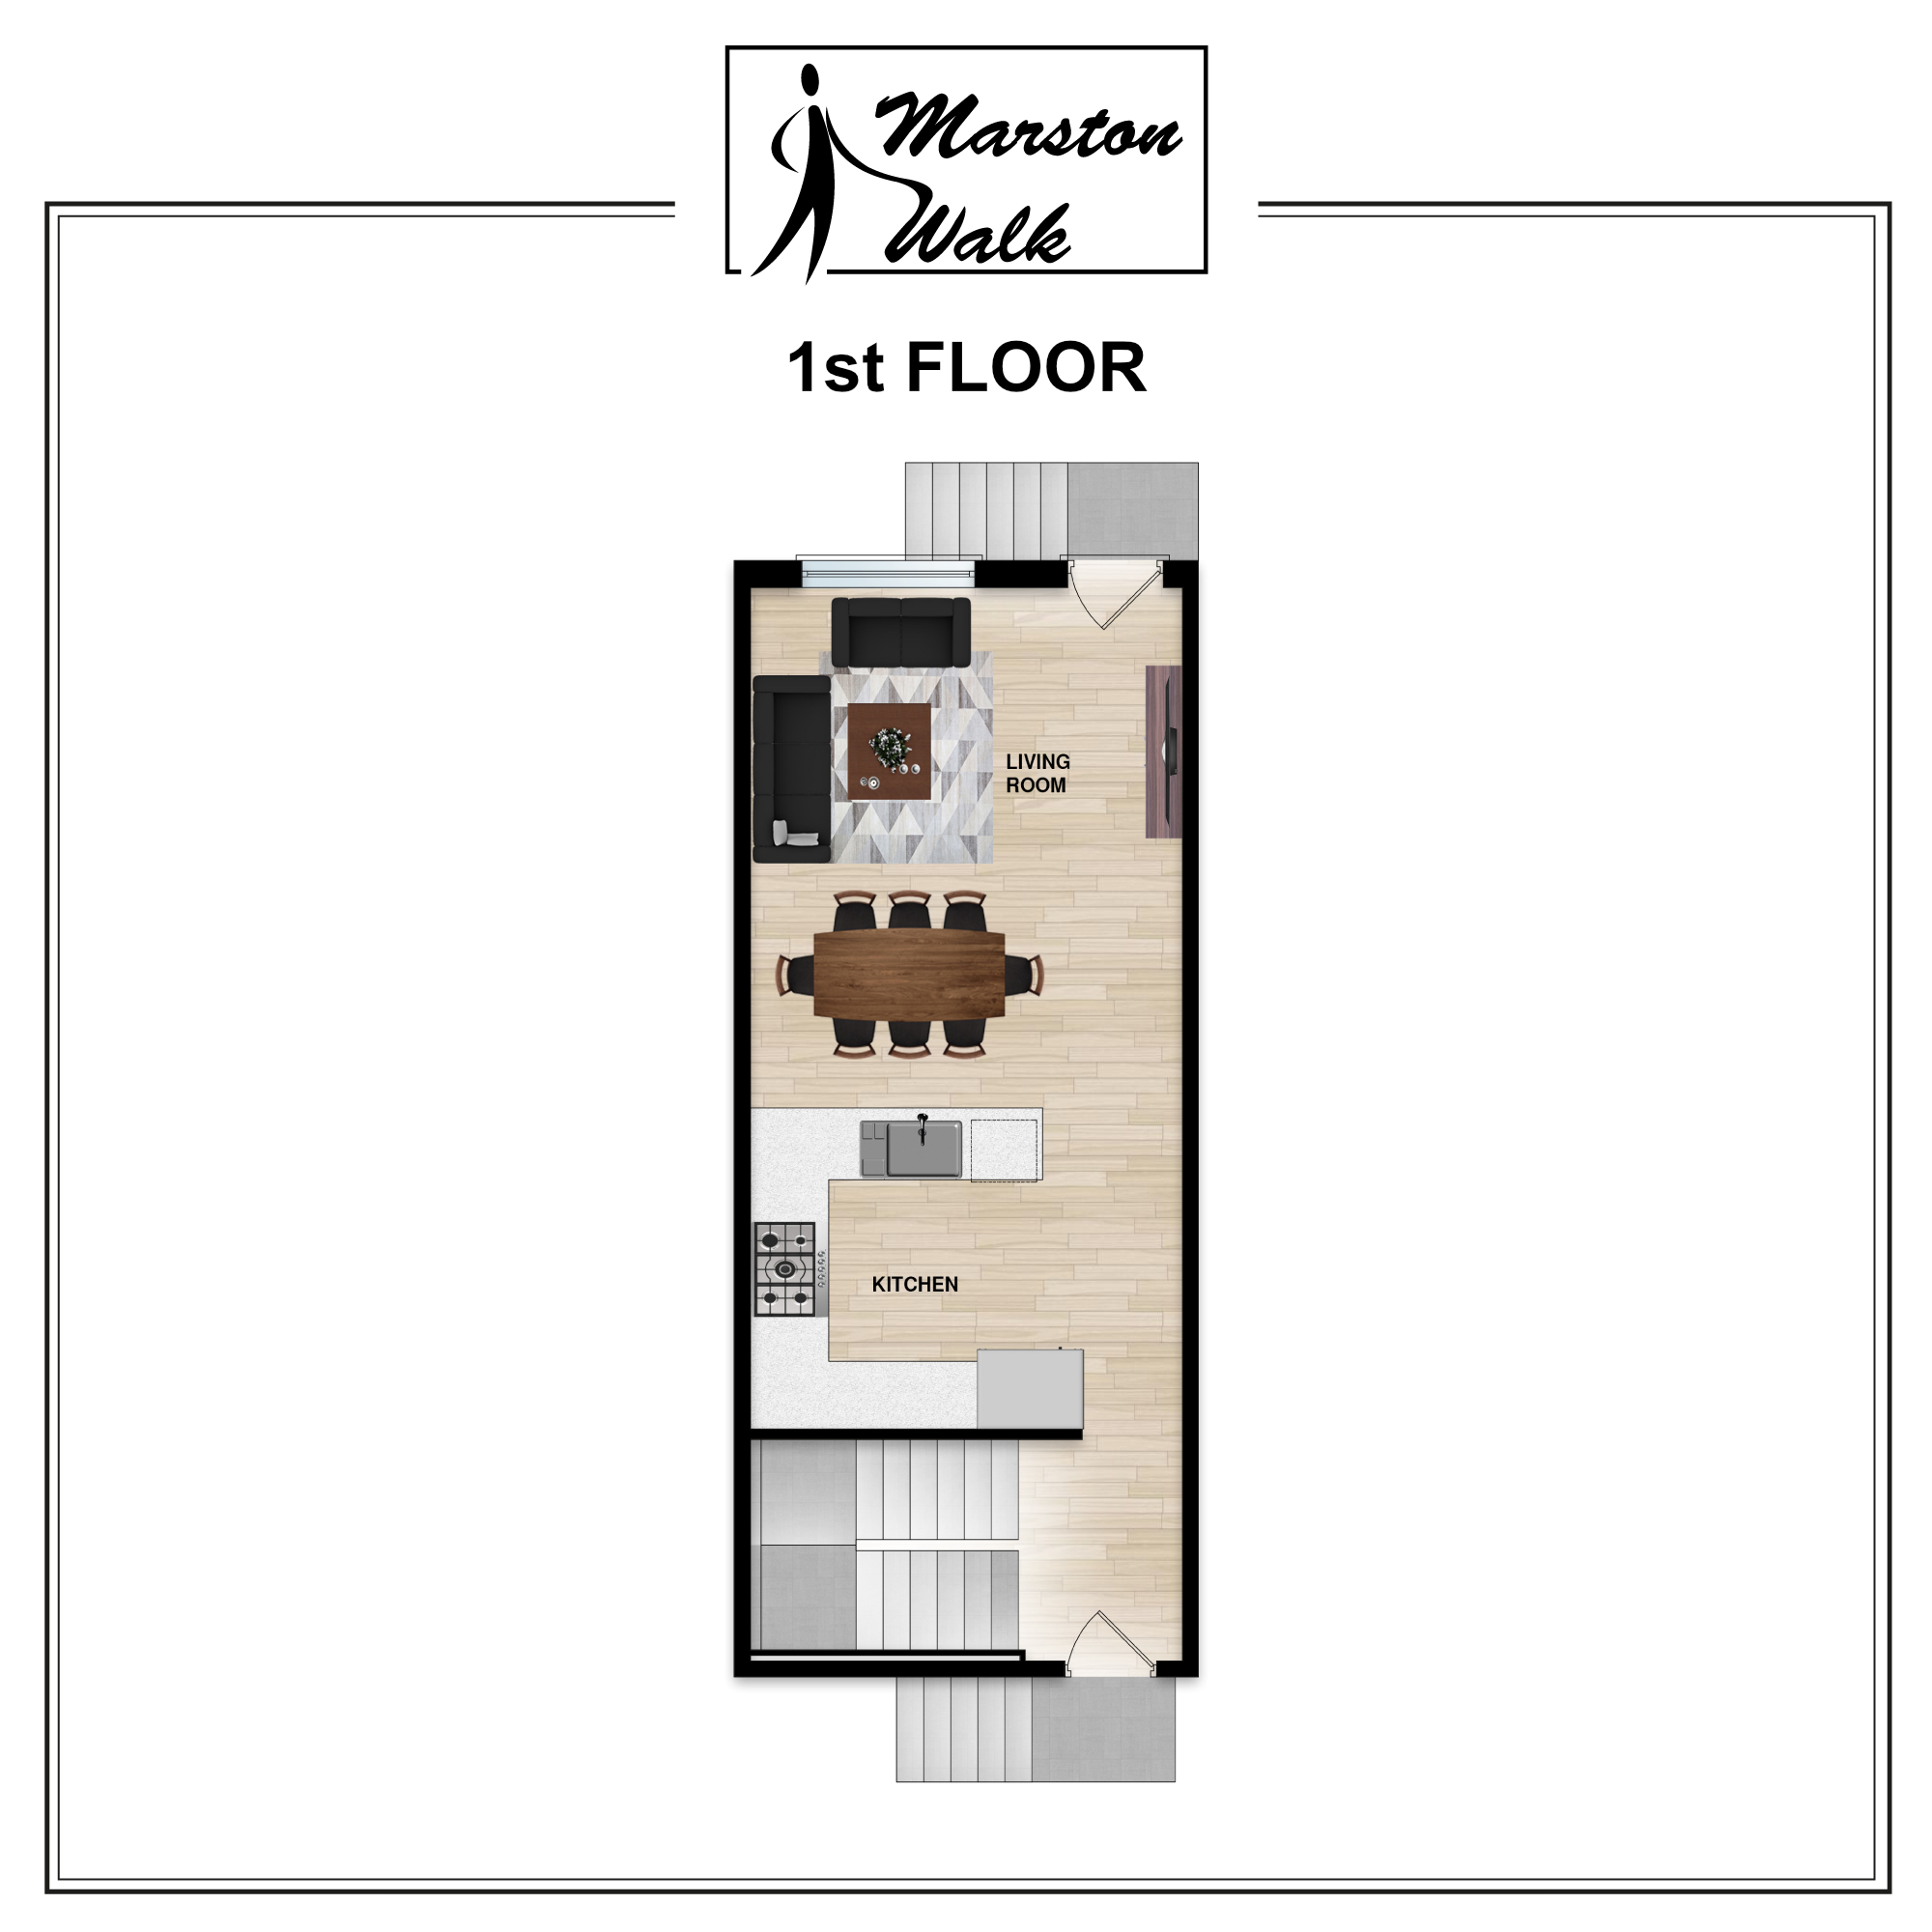 marston-walk_first-floor